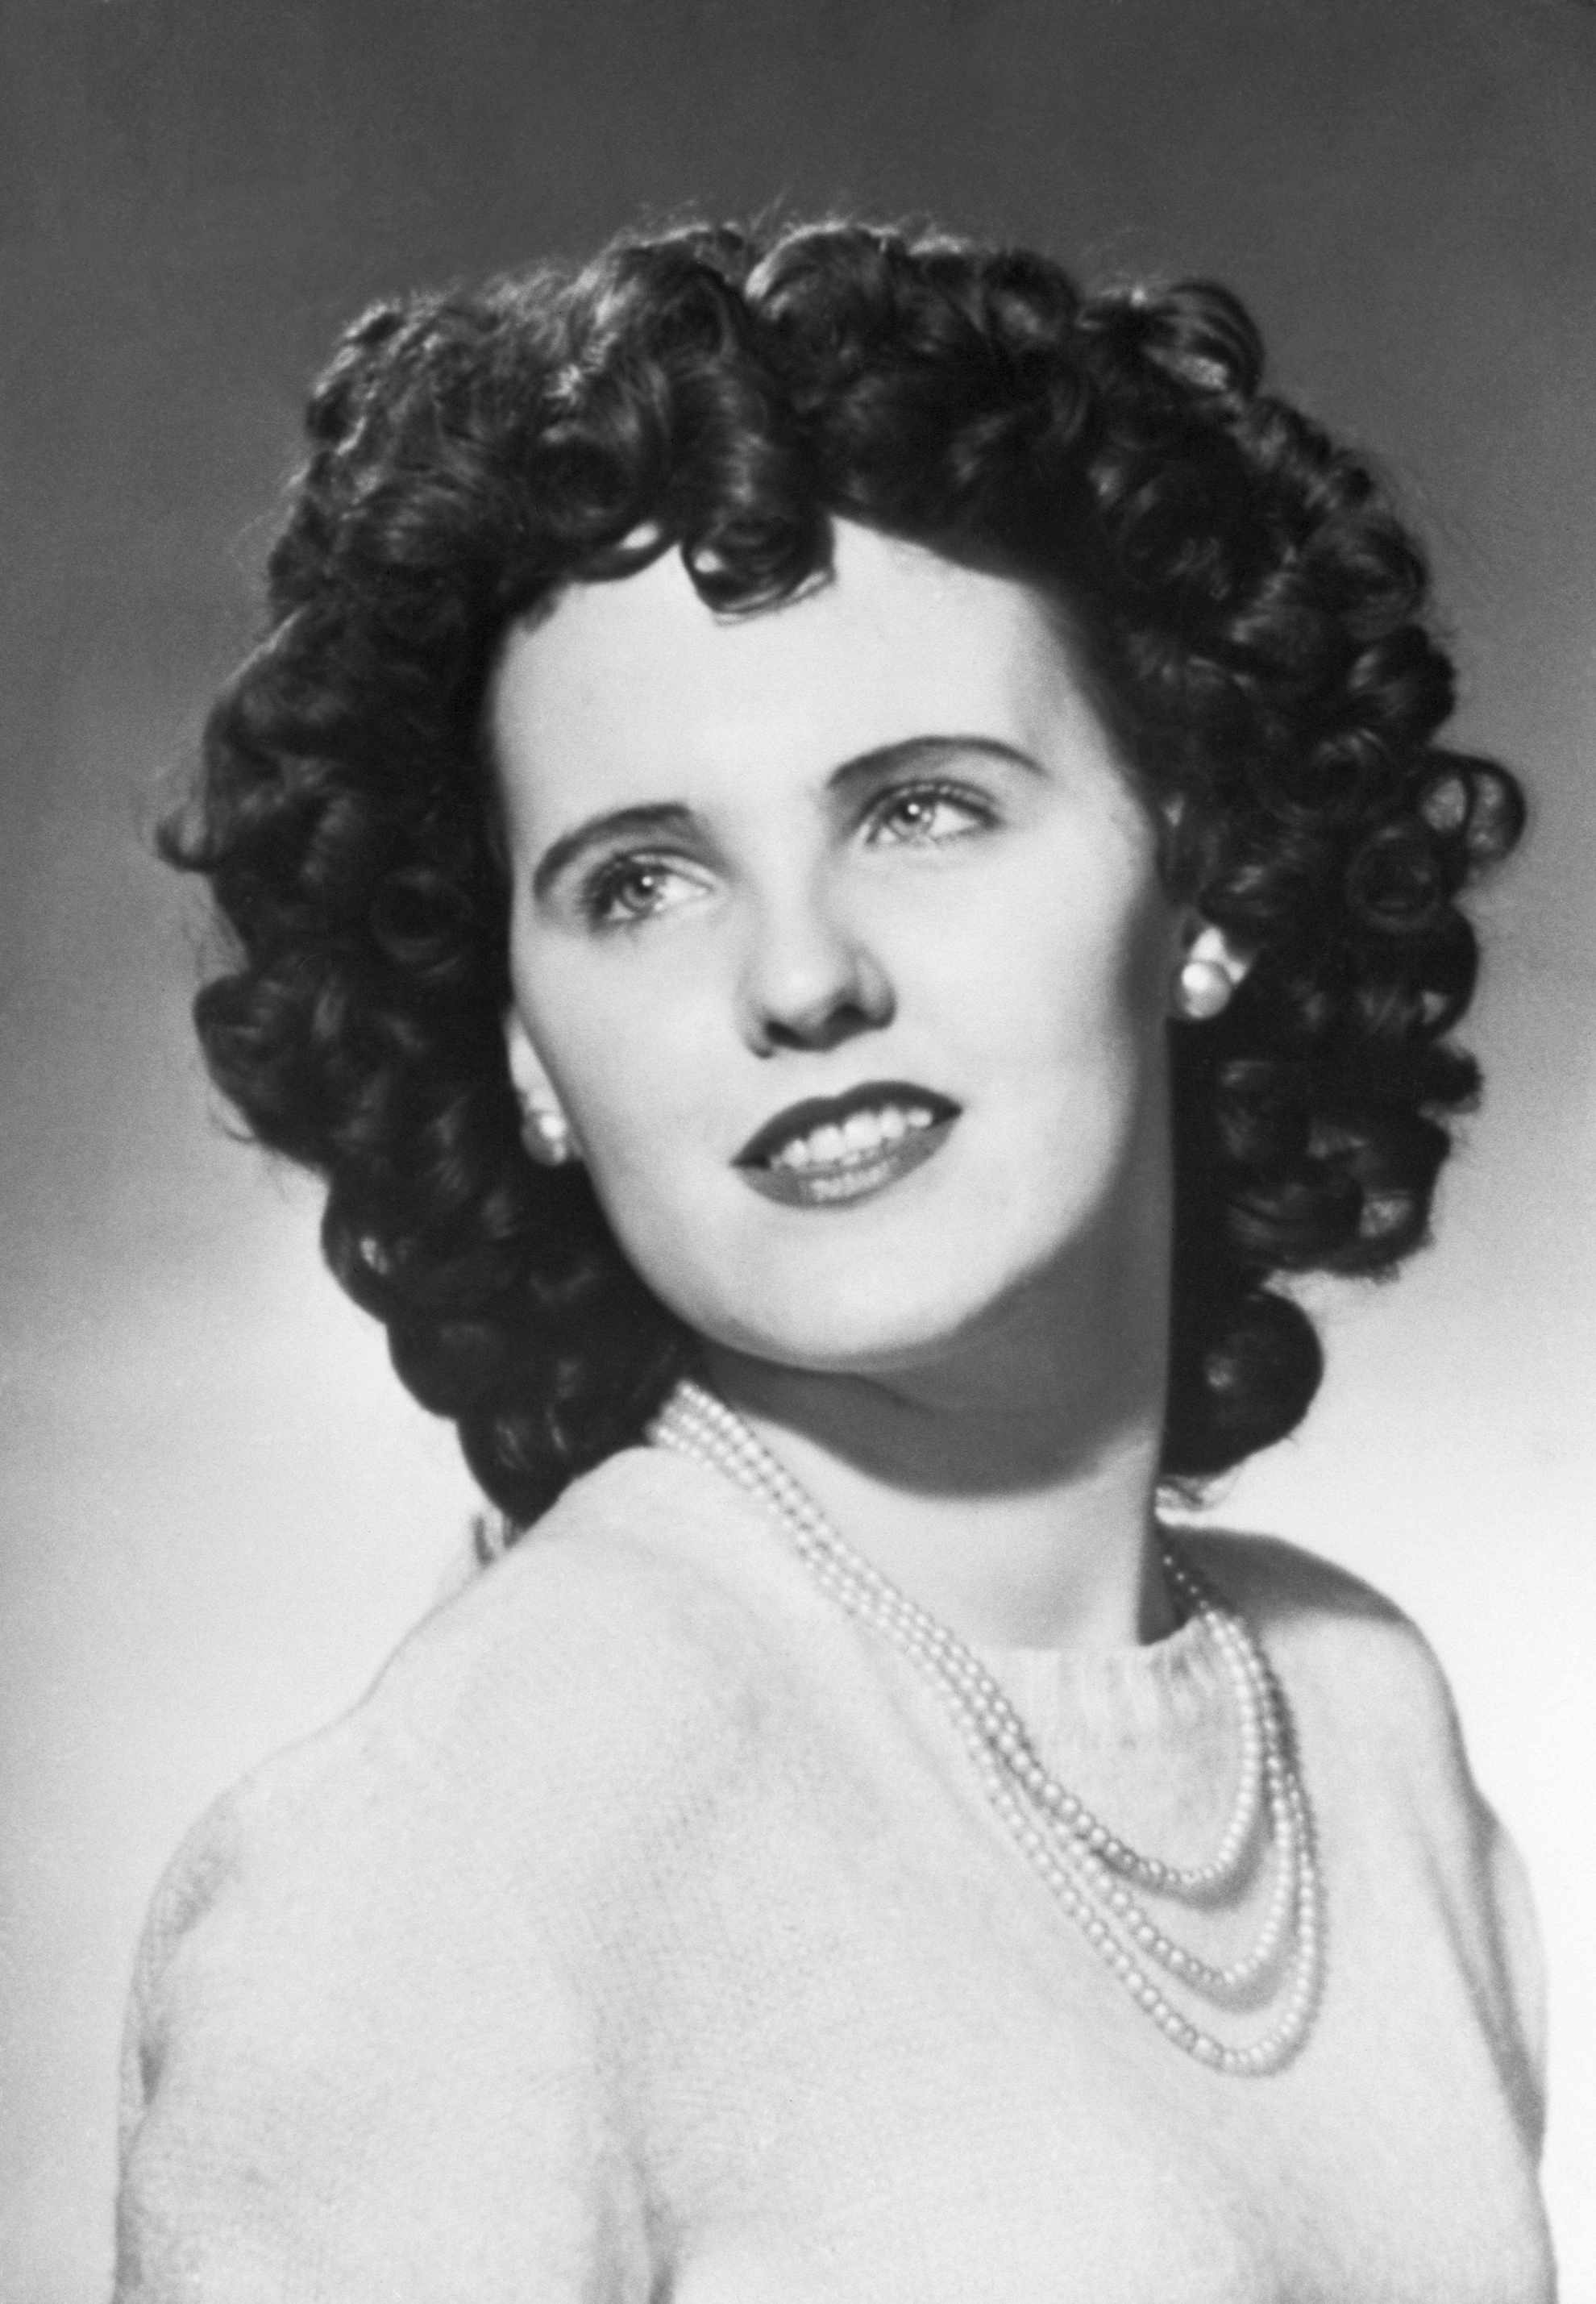 a photograph of Elizabeth Short